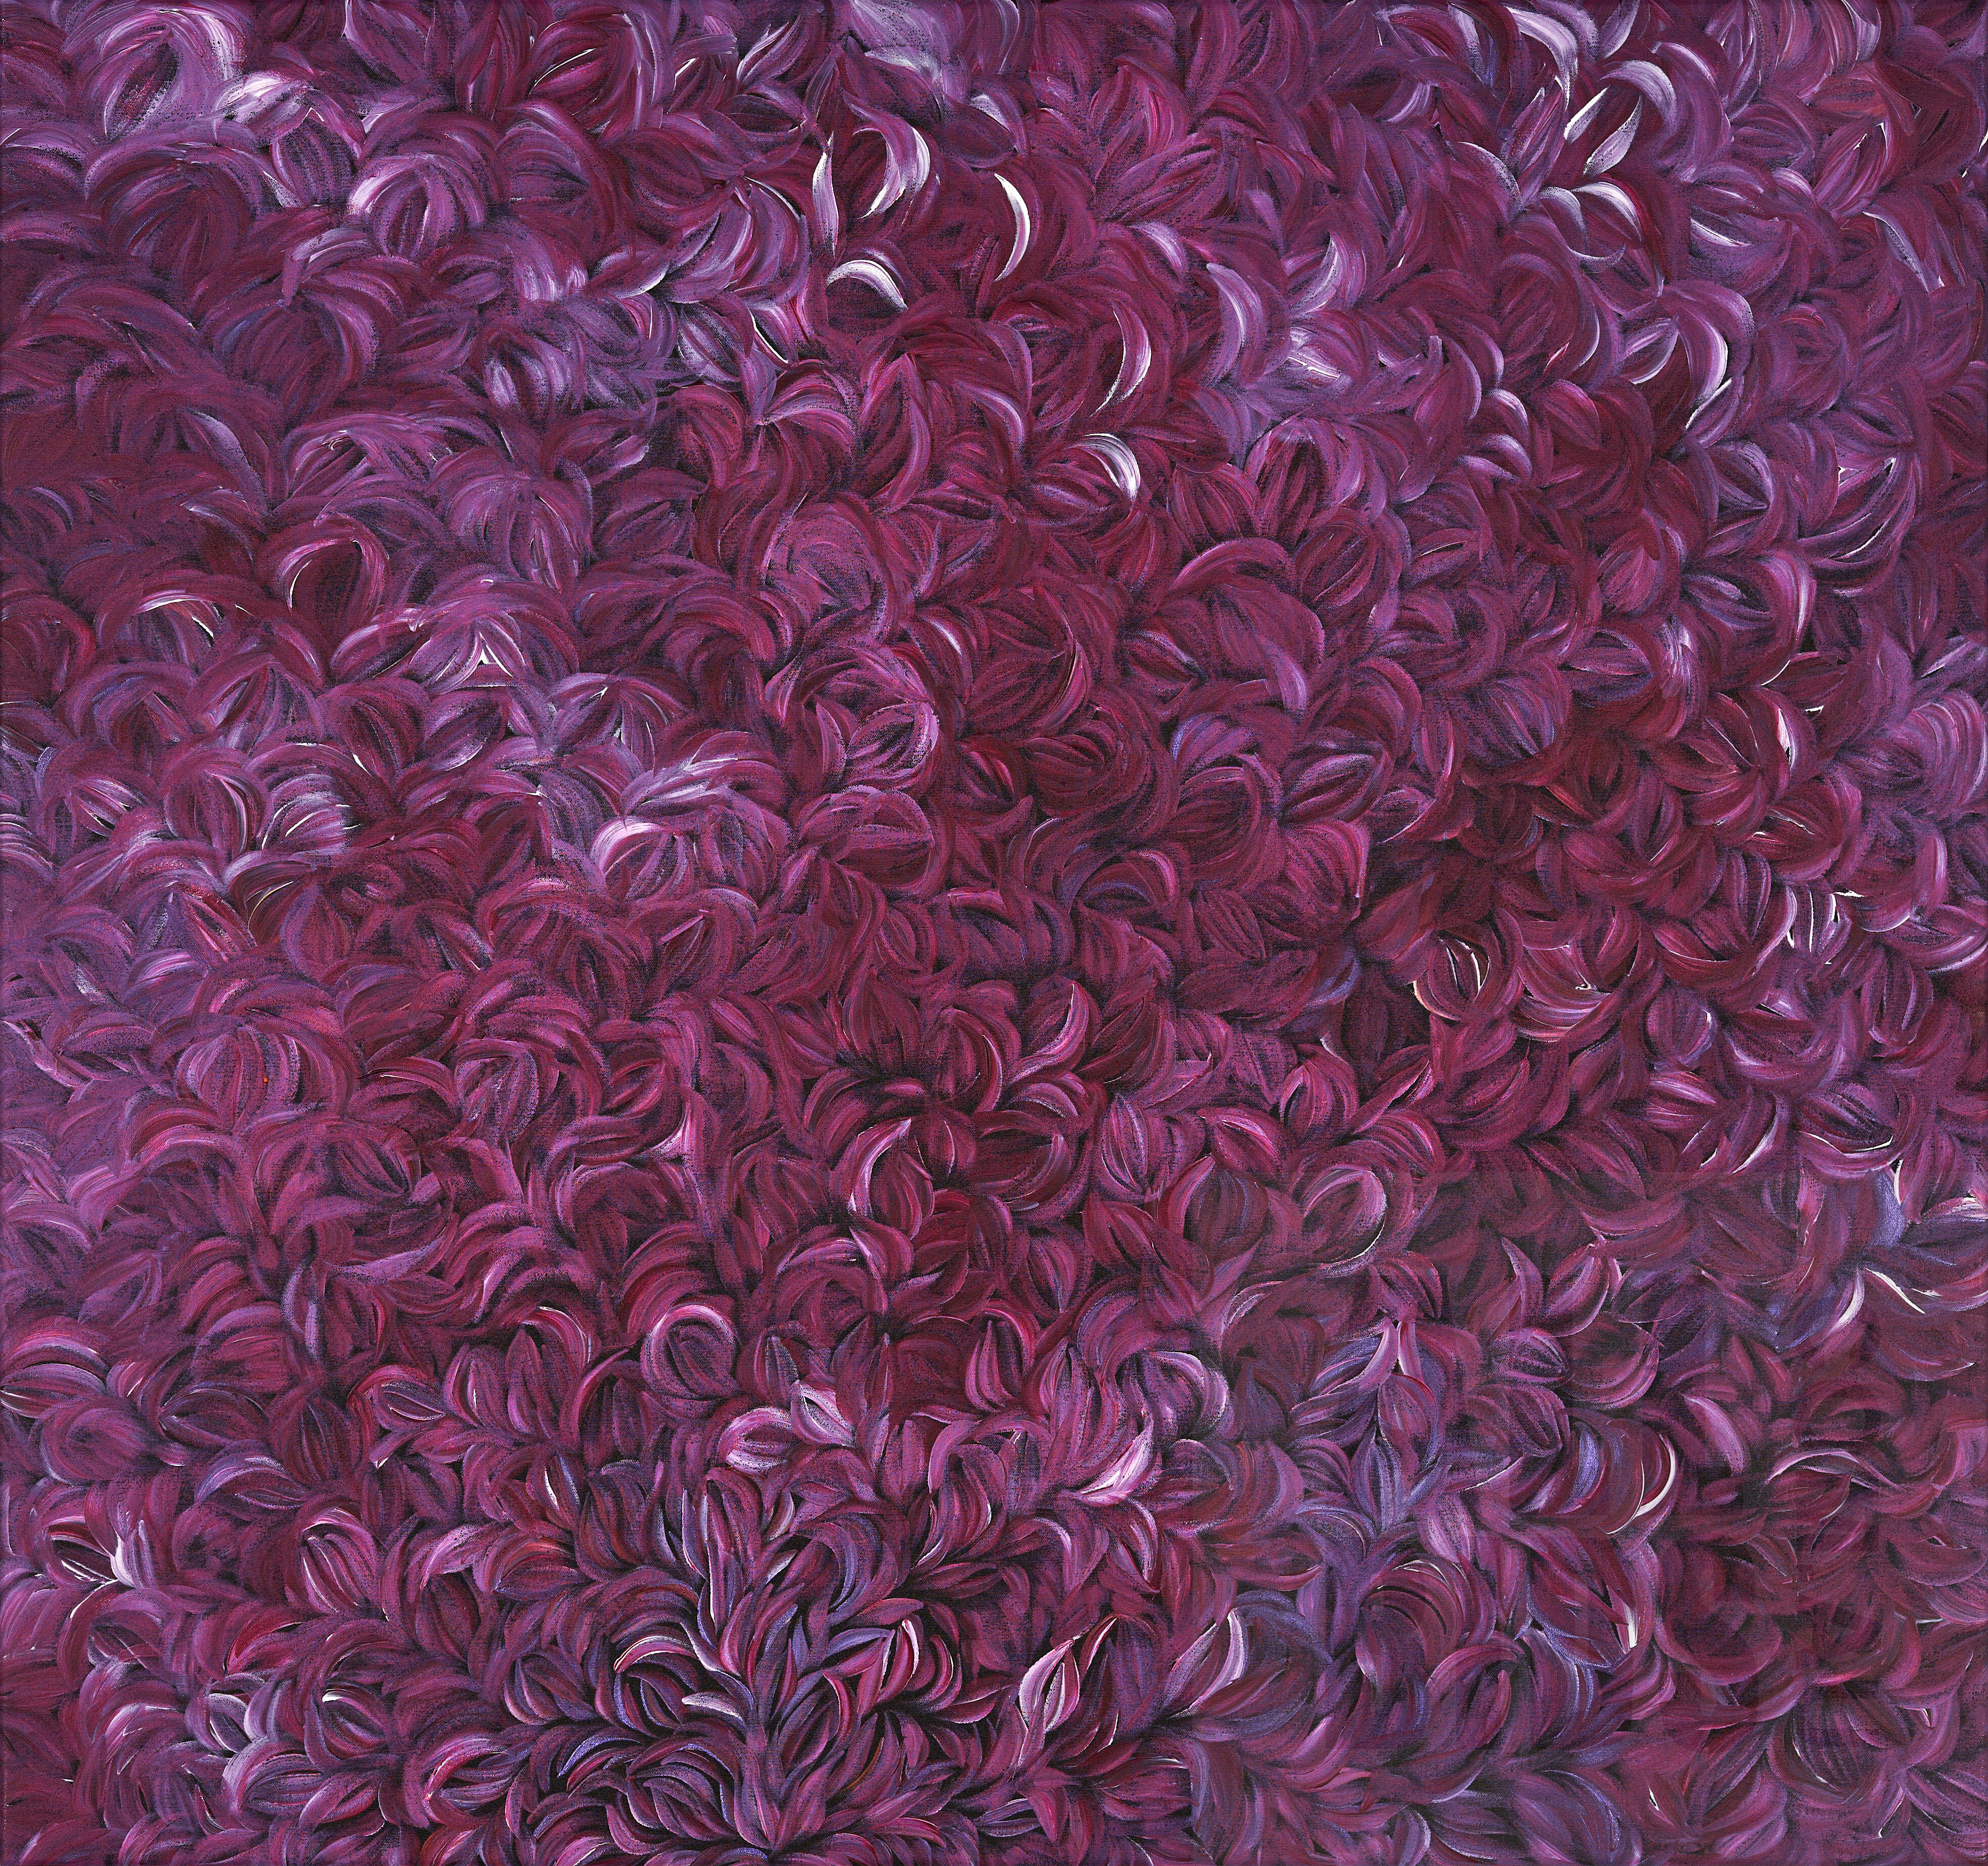 'Margaret Scobie (born 1948), Bush Medicine Leaves, Acrylic on Canvas, 87 x 93 cm'